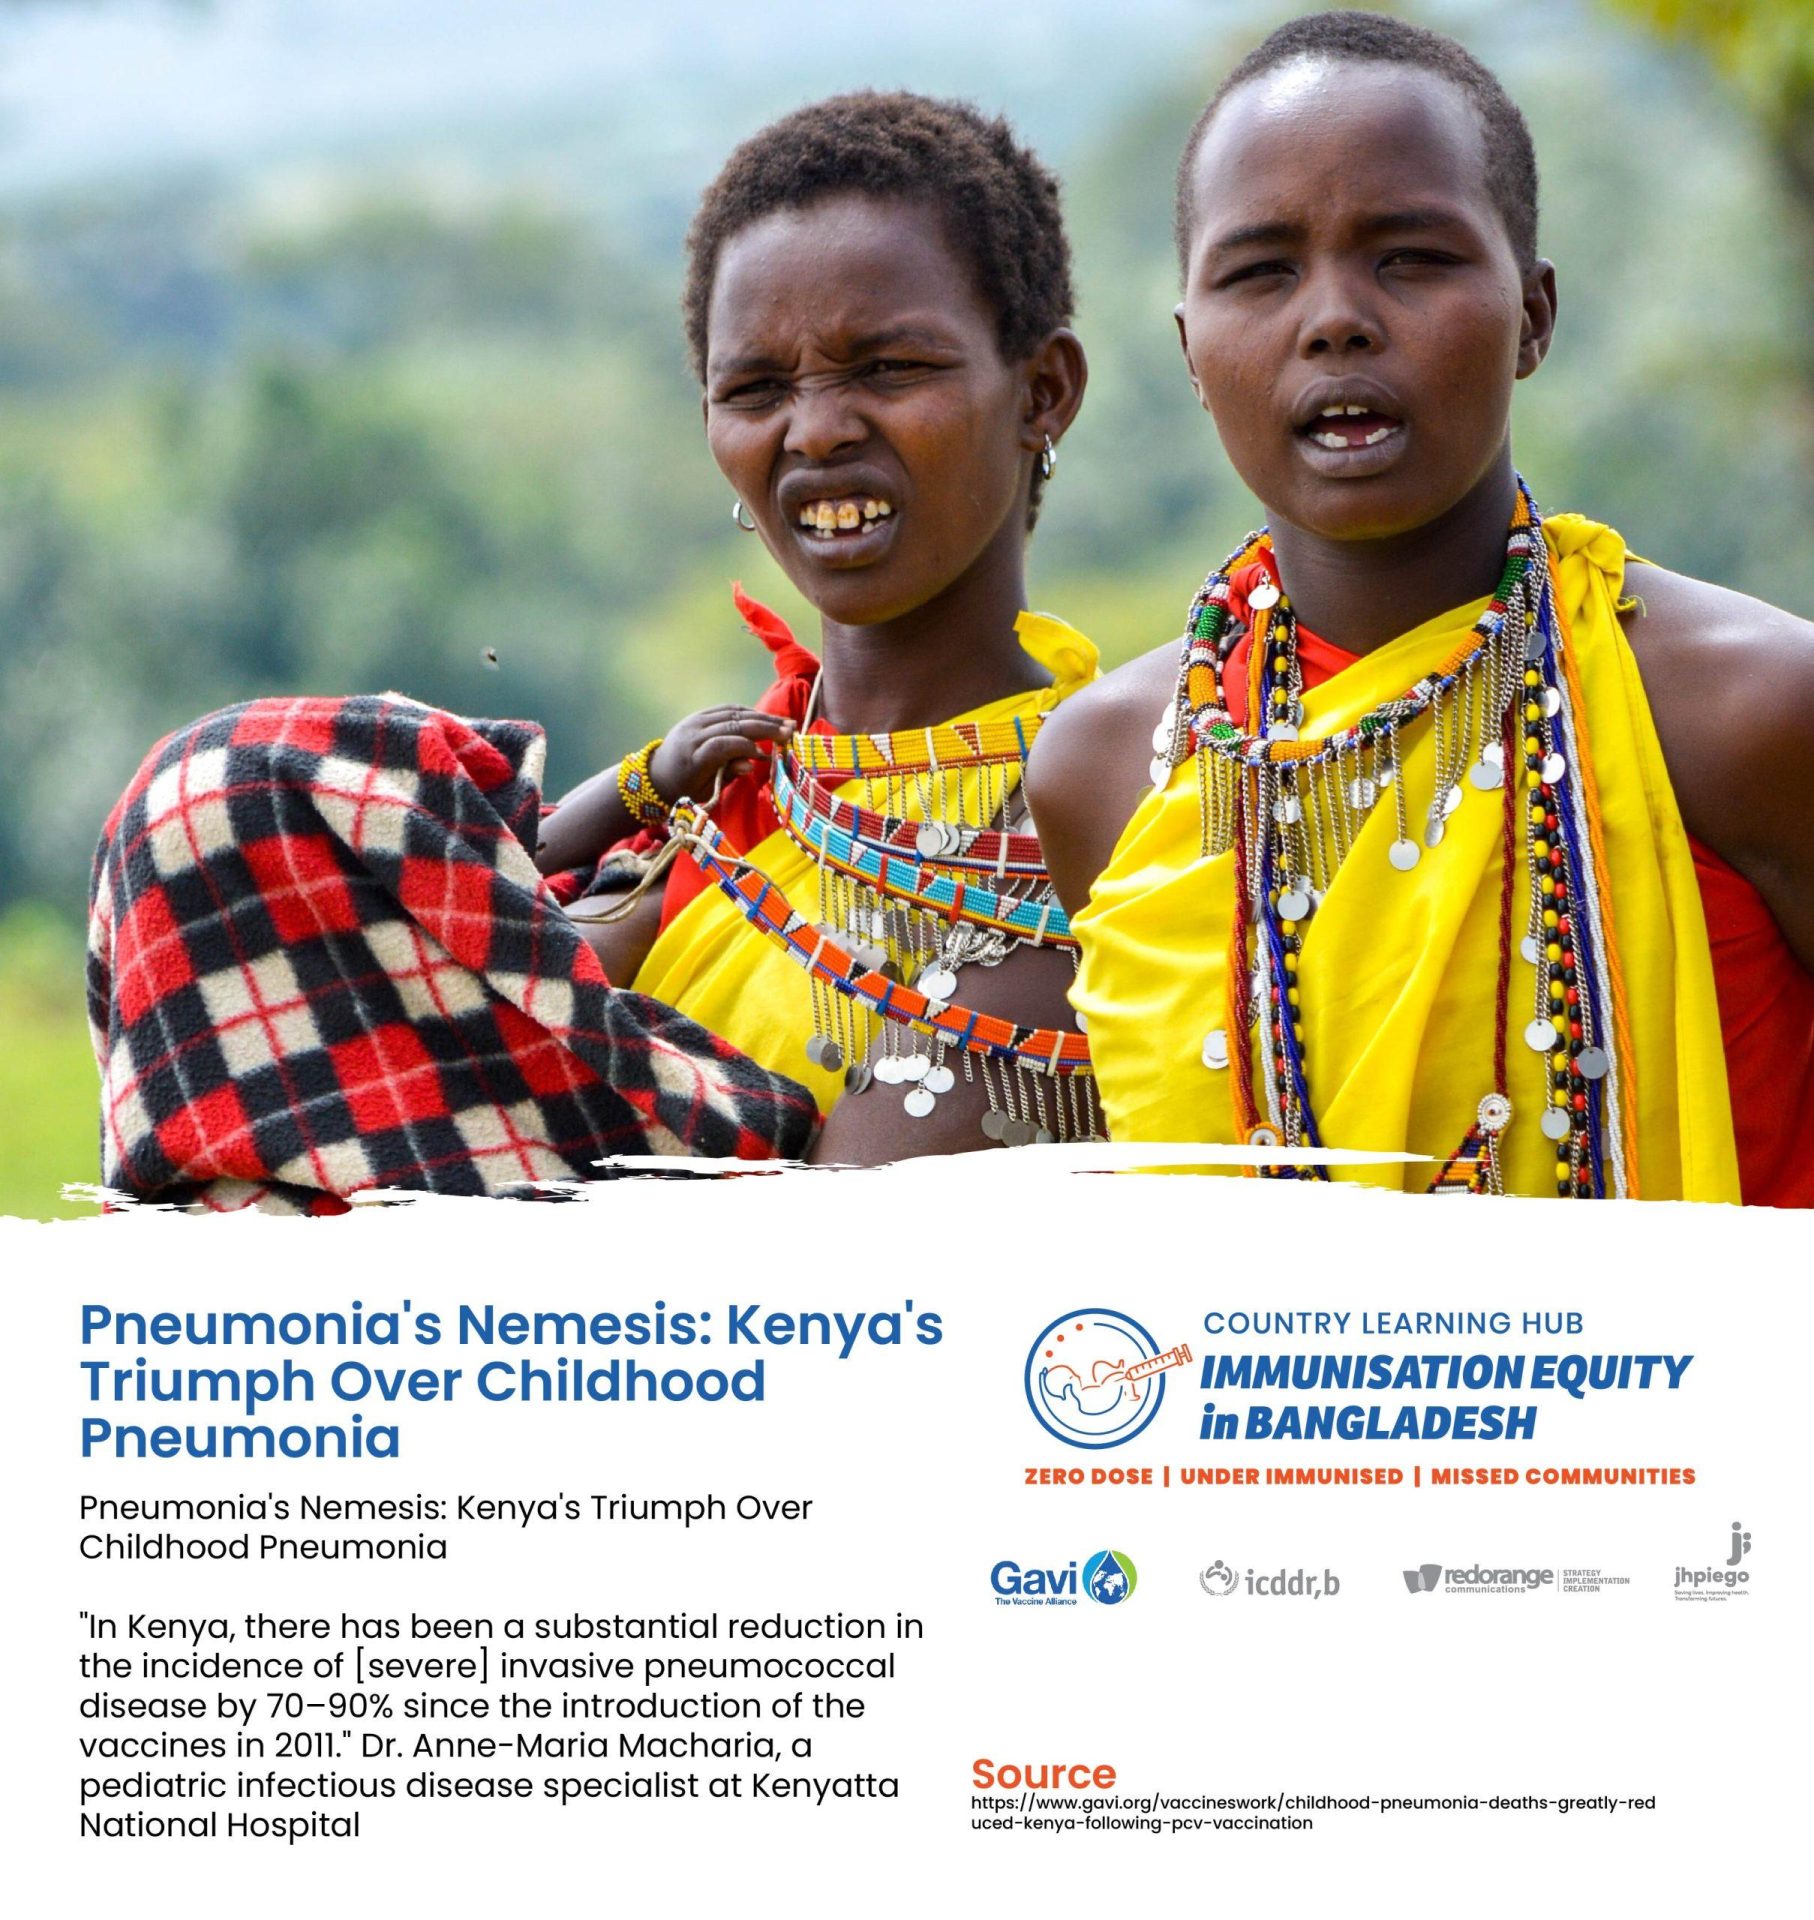 Pneumonia’s Nemesis: Kenya’s Triumph Over Childhood Pneumonia